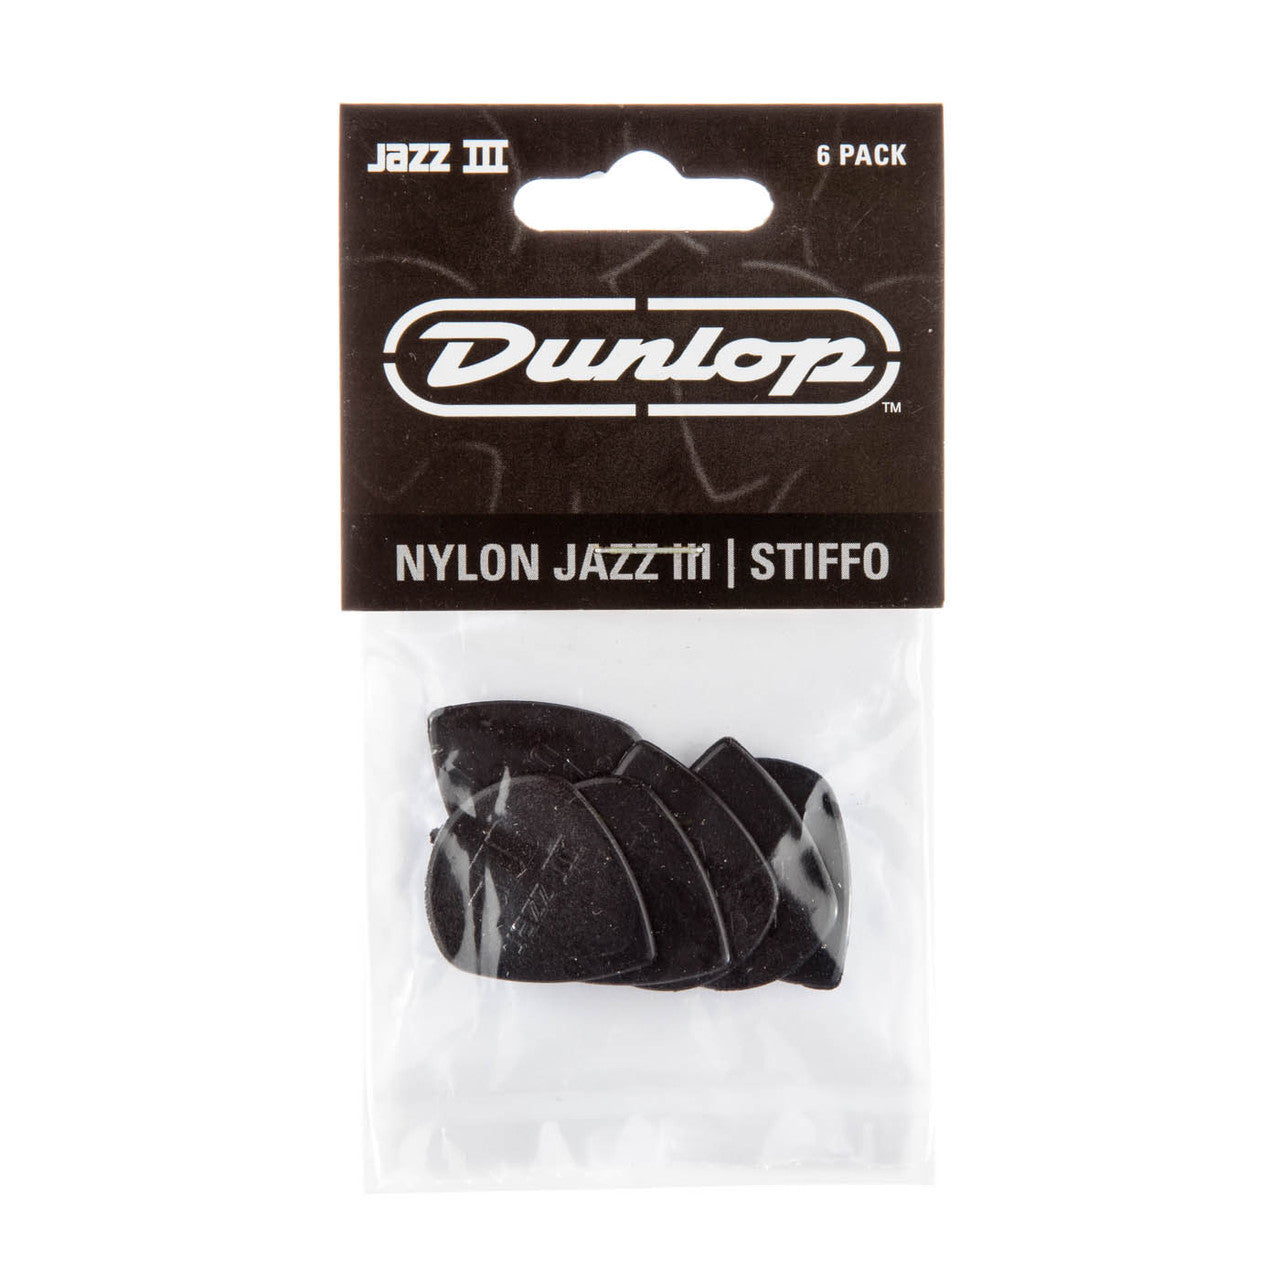 Dunlop 47P3S Nylon Jazz III Stiffo Picks 6 Pack